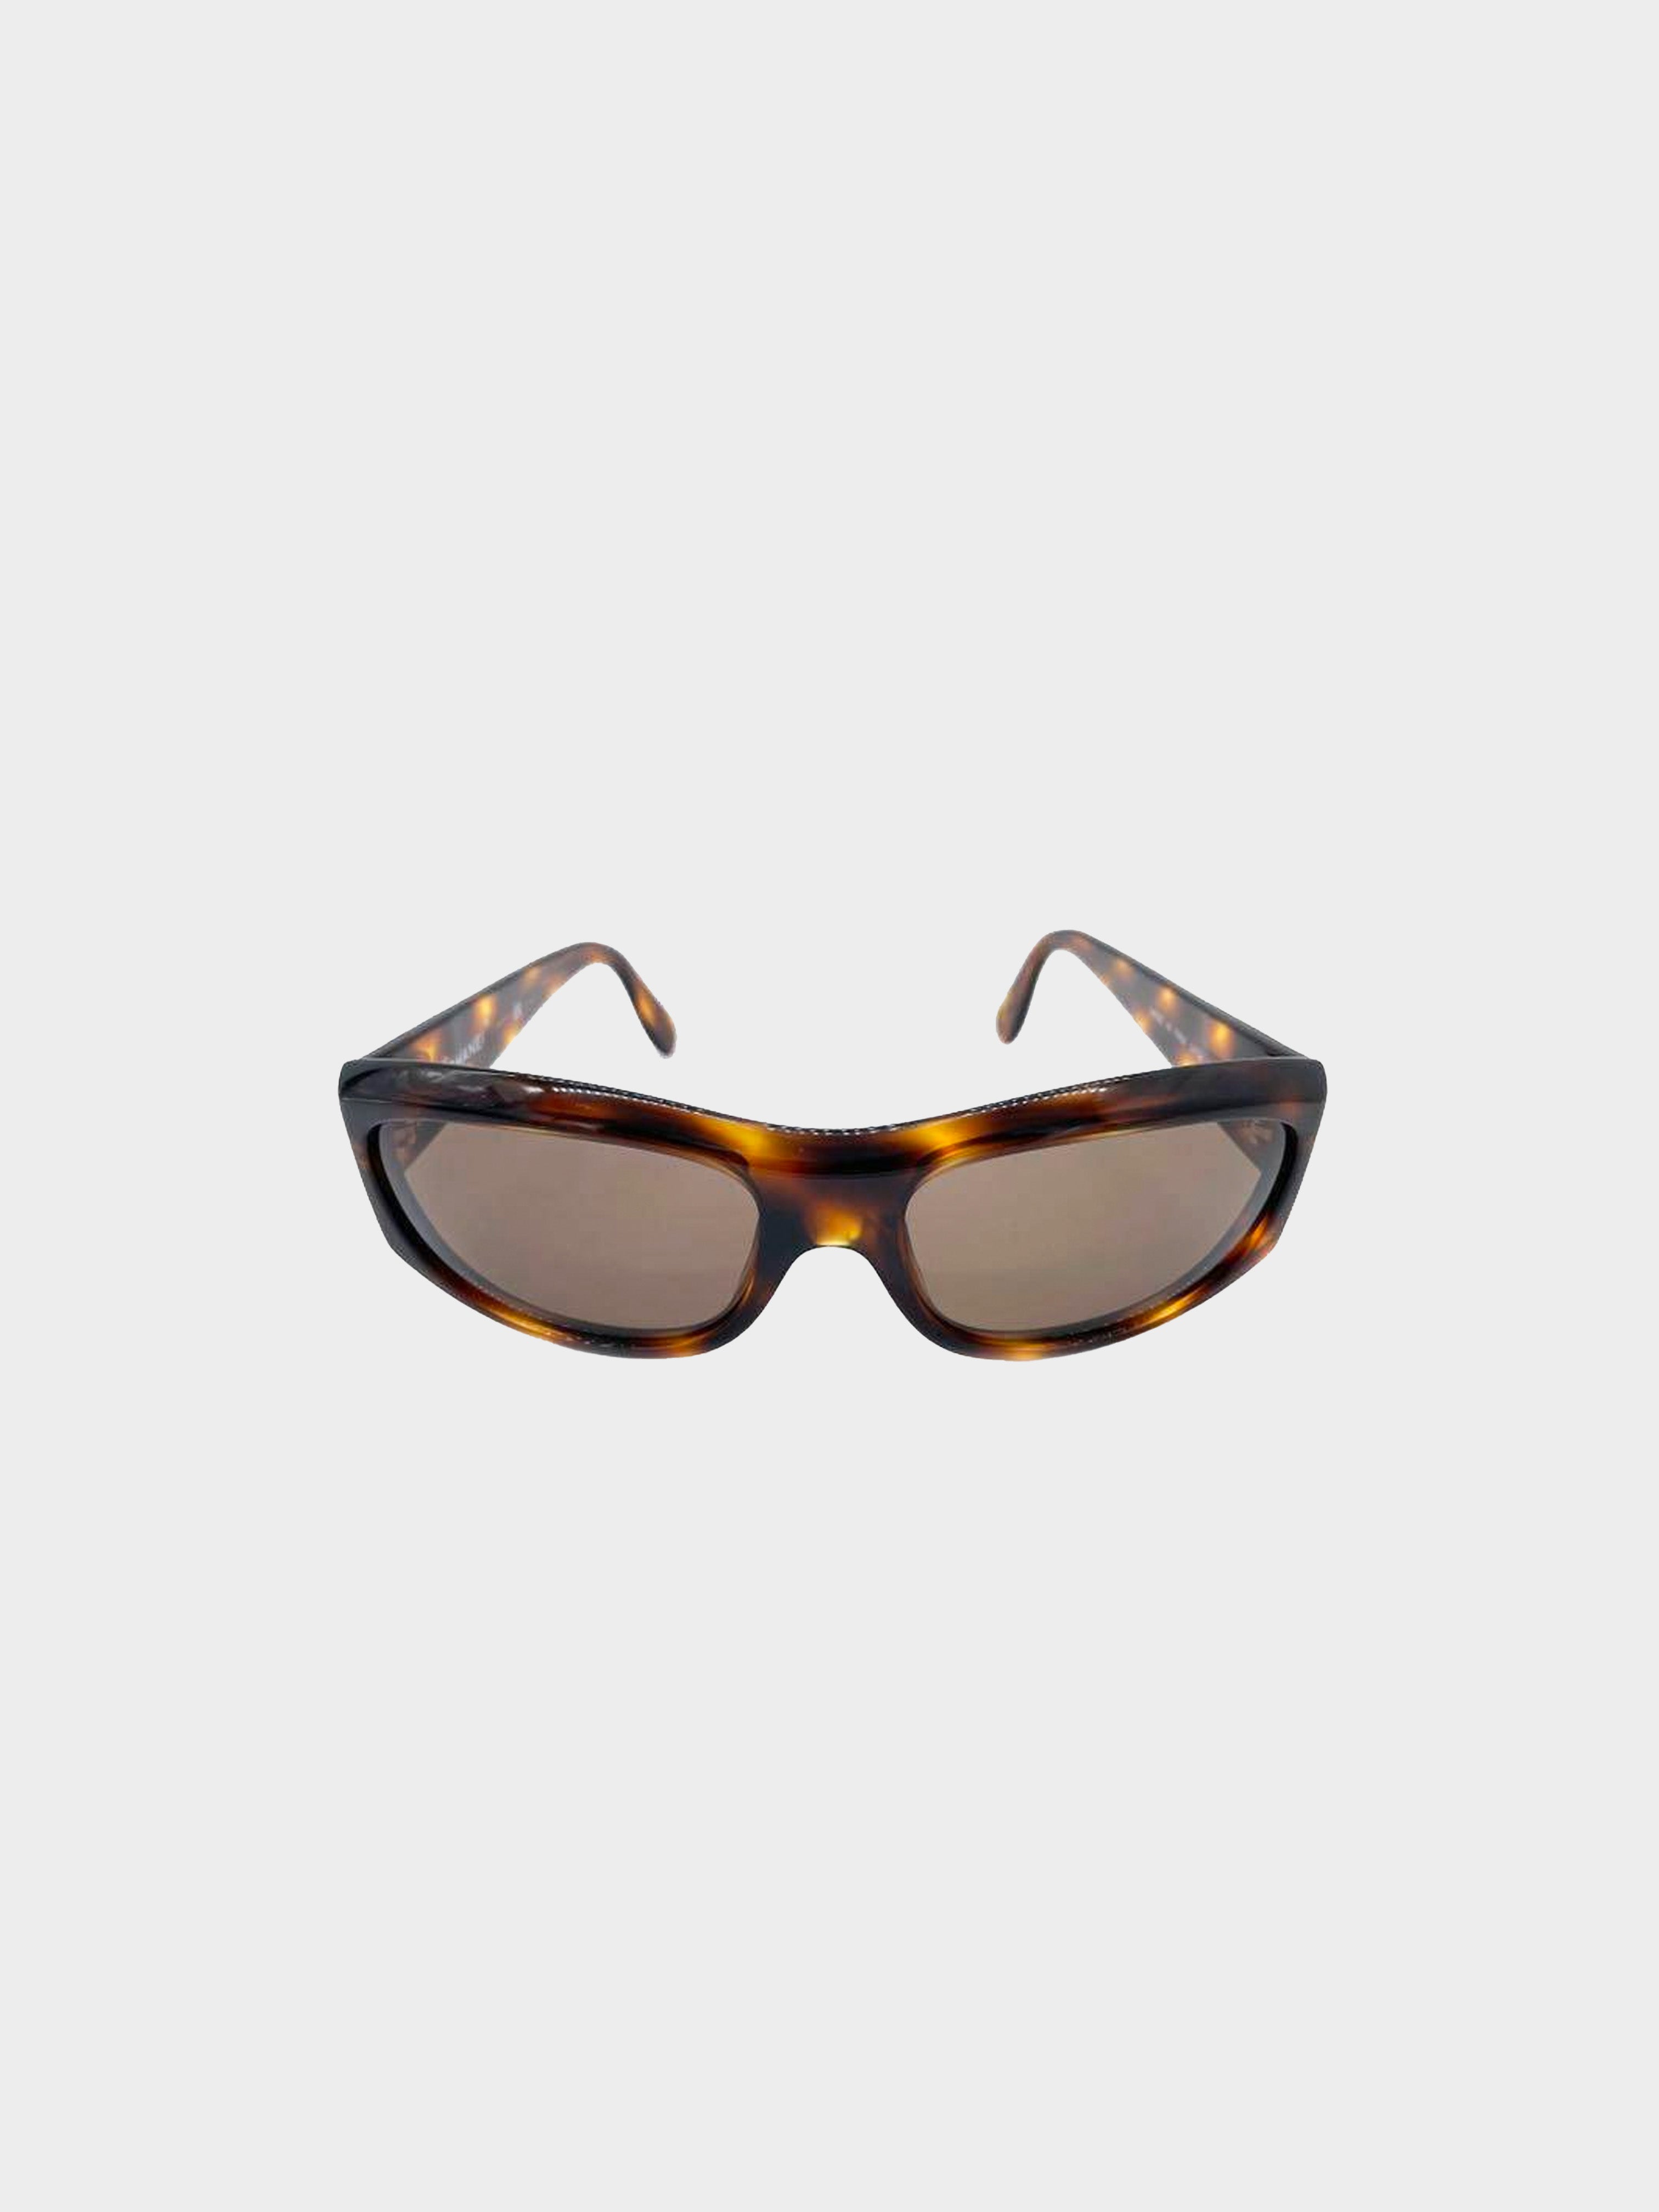 Chanel 2000s Wrap Frame Tortoise Sunglasses · INTO